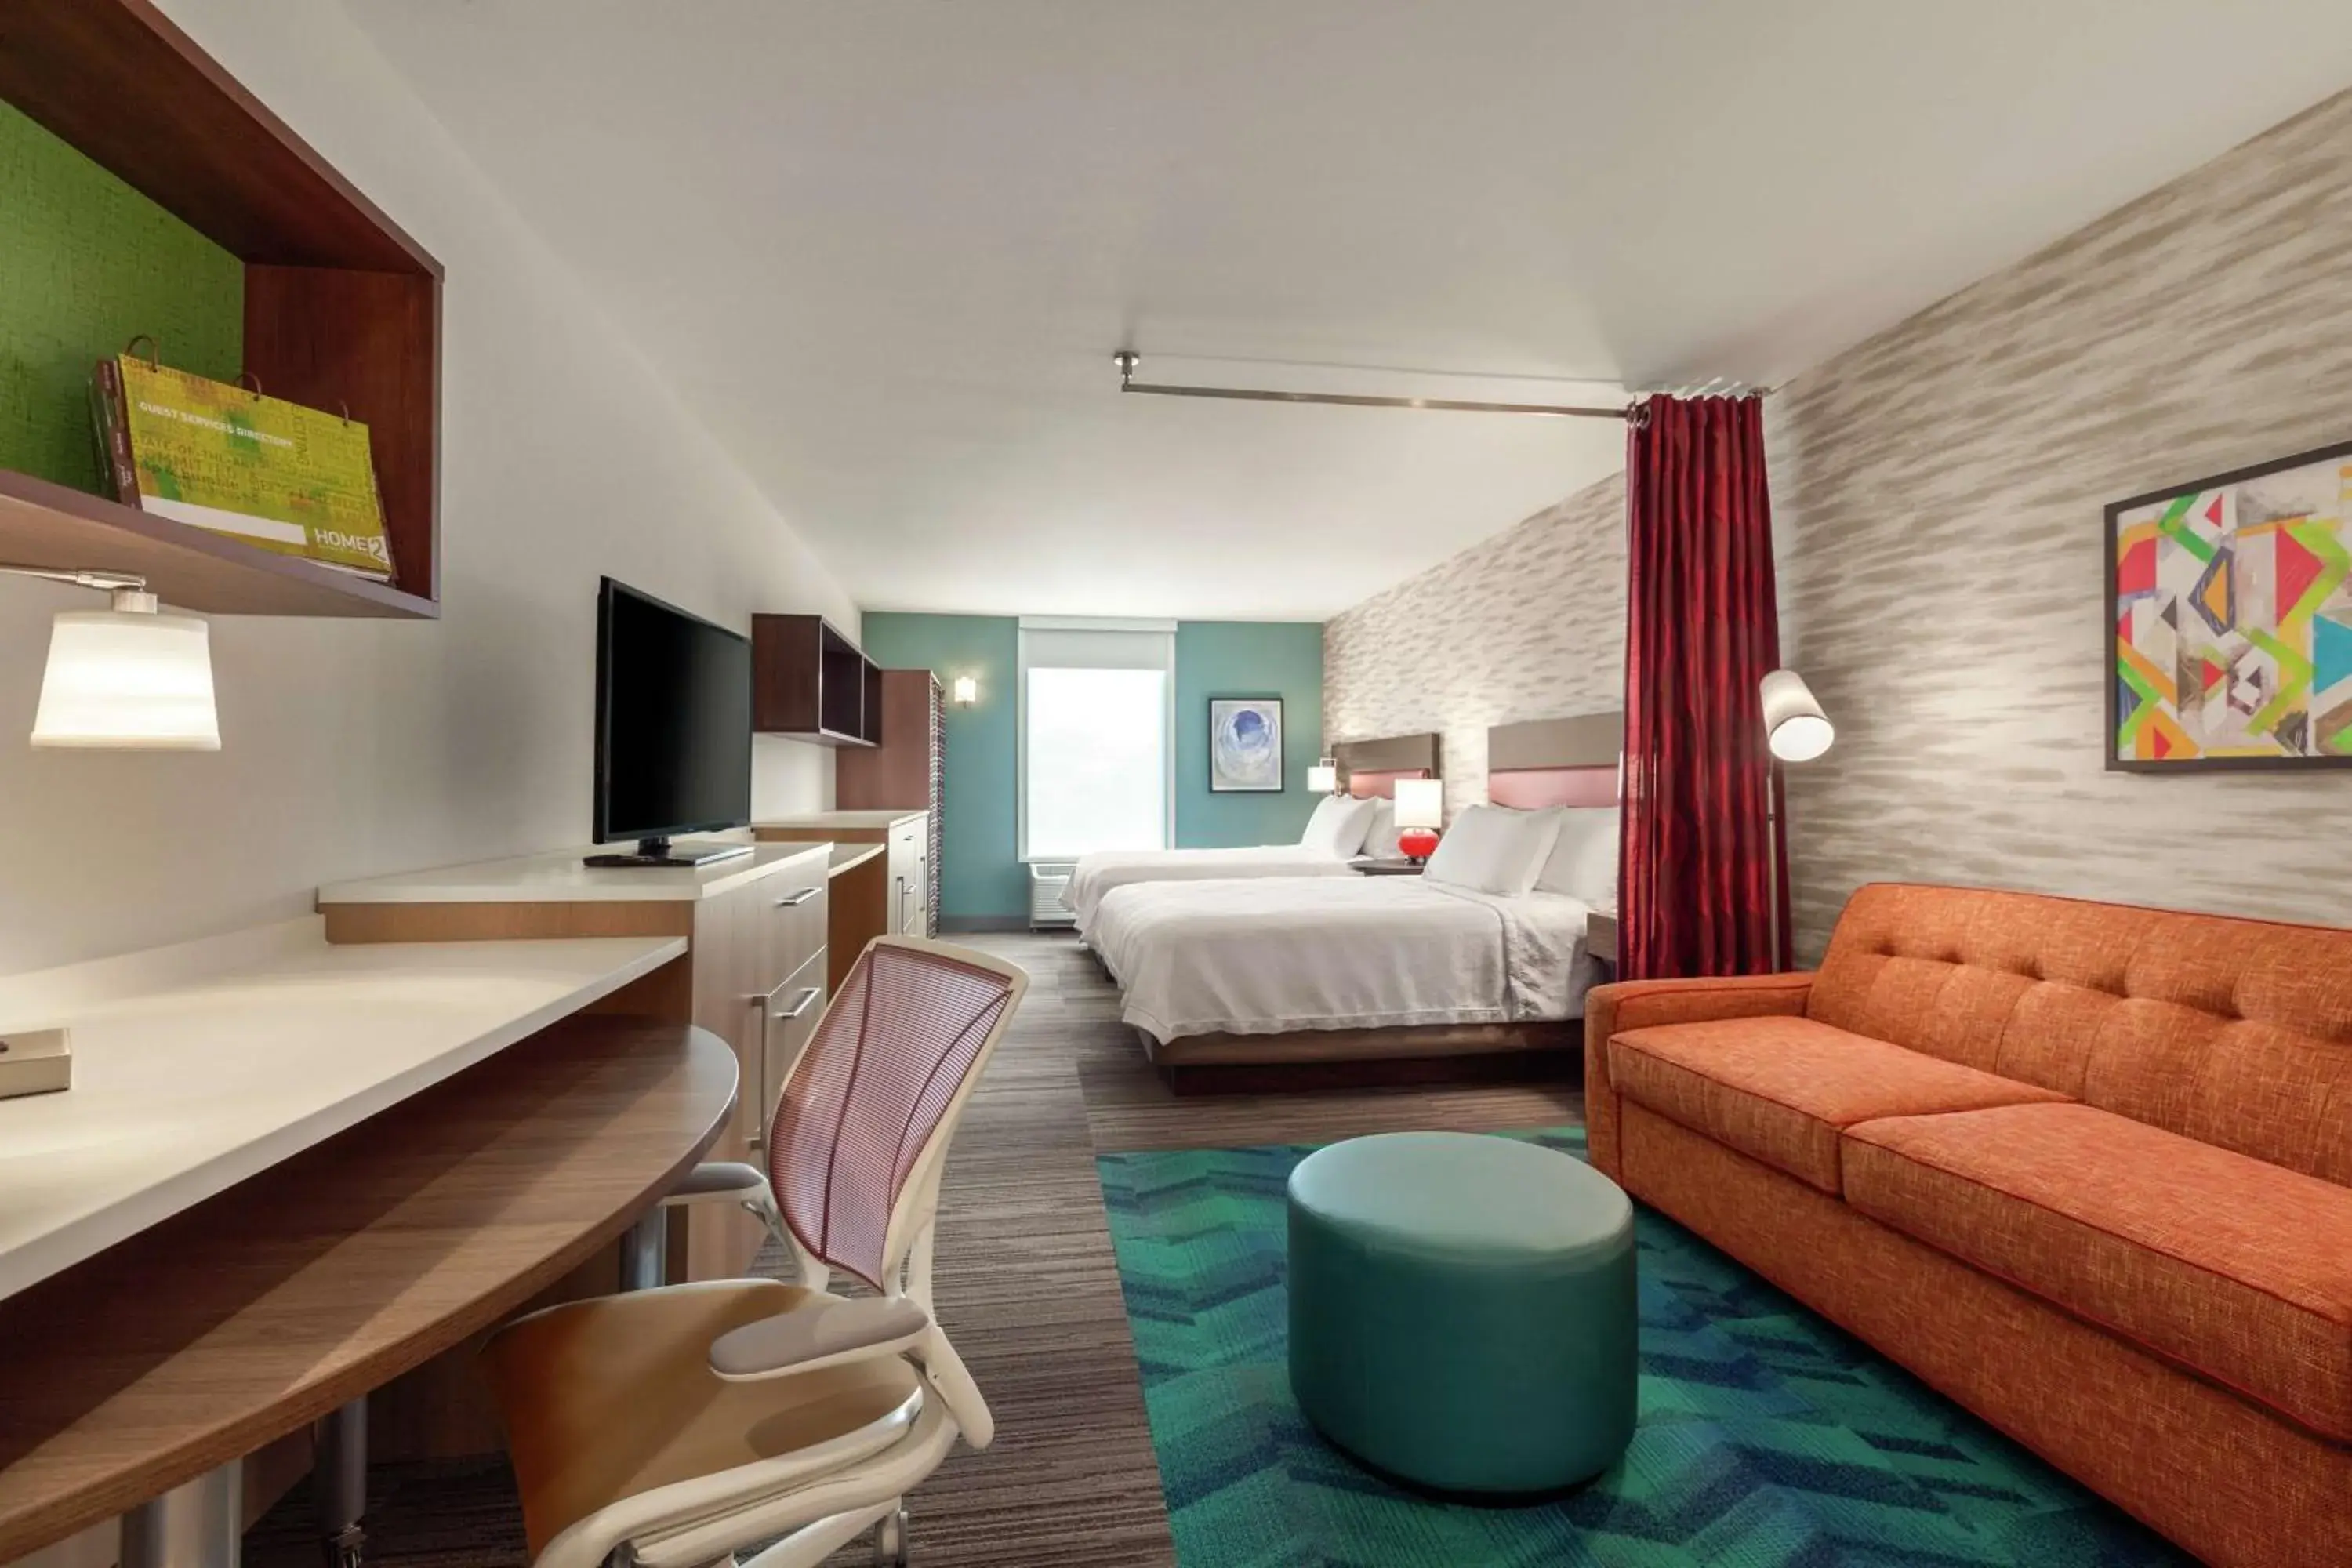 Bedroom in Home2 Suites by Hilton Sarasota - Bradenton Airport, FL